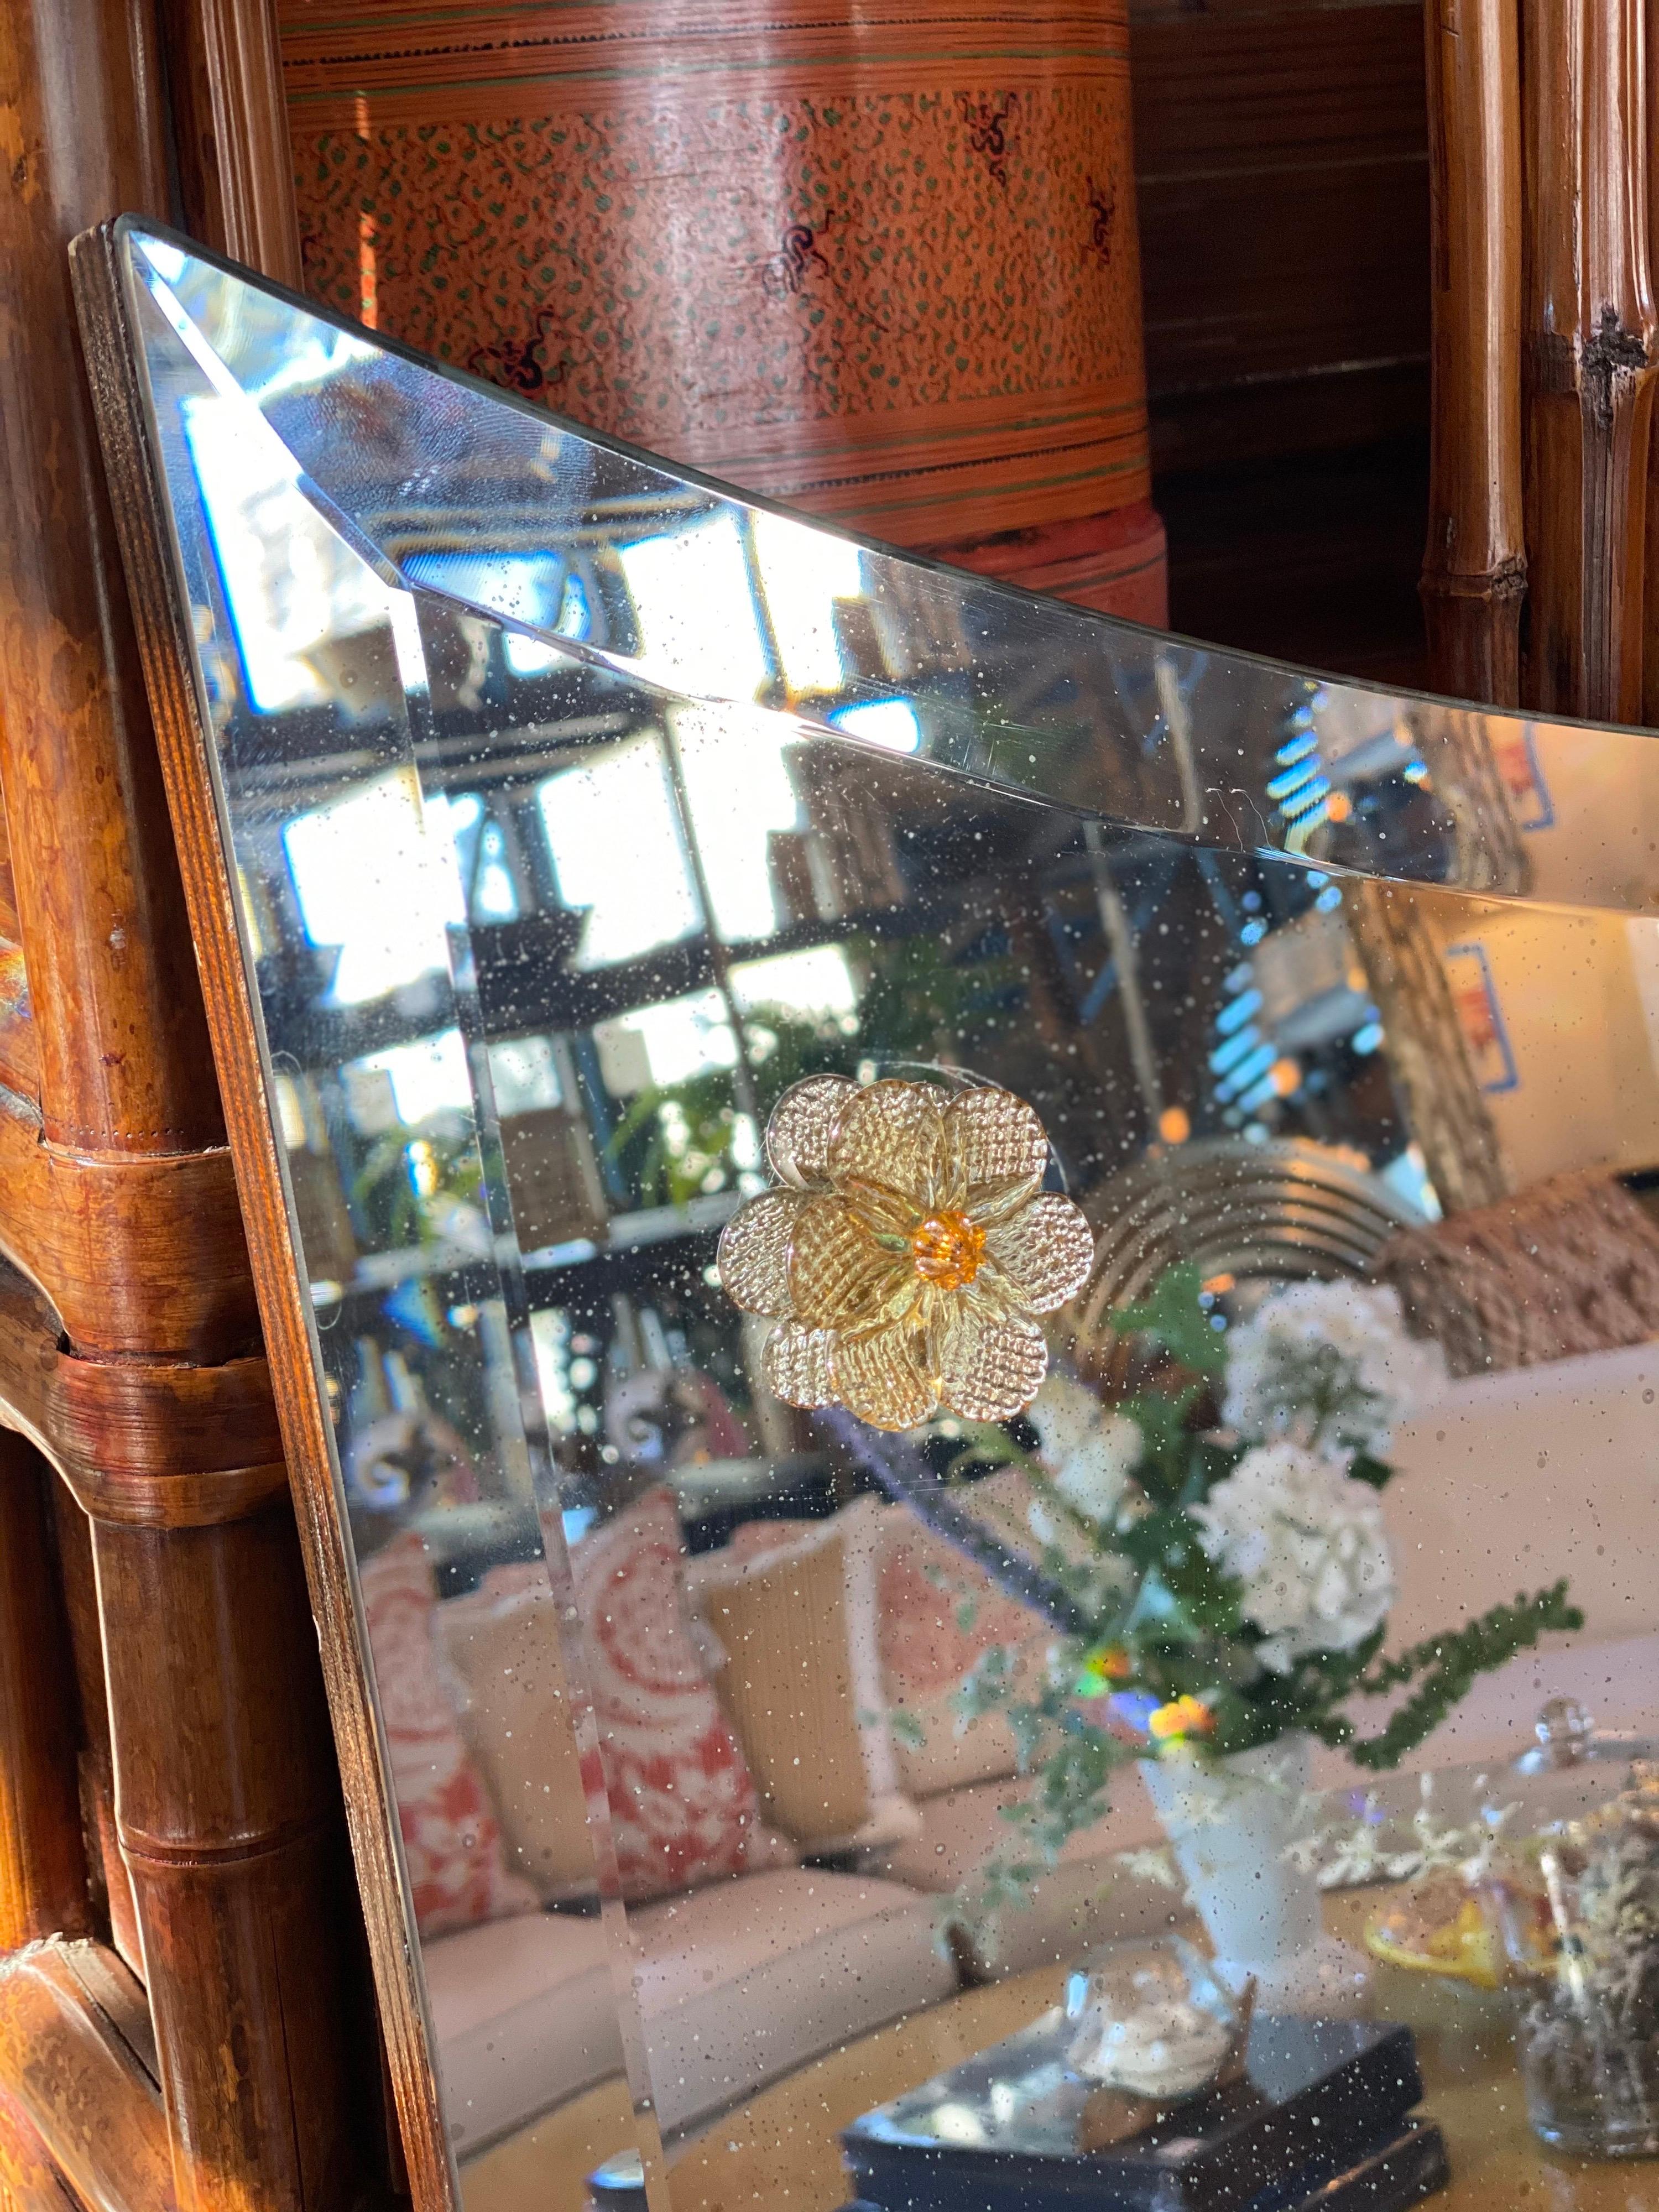 Custom Donghia mirror with Murano citrine florettes. Crescent top antiqued mirror.

Measures: 54